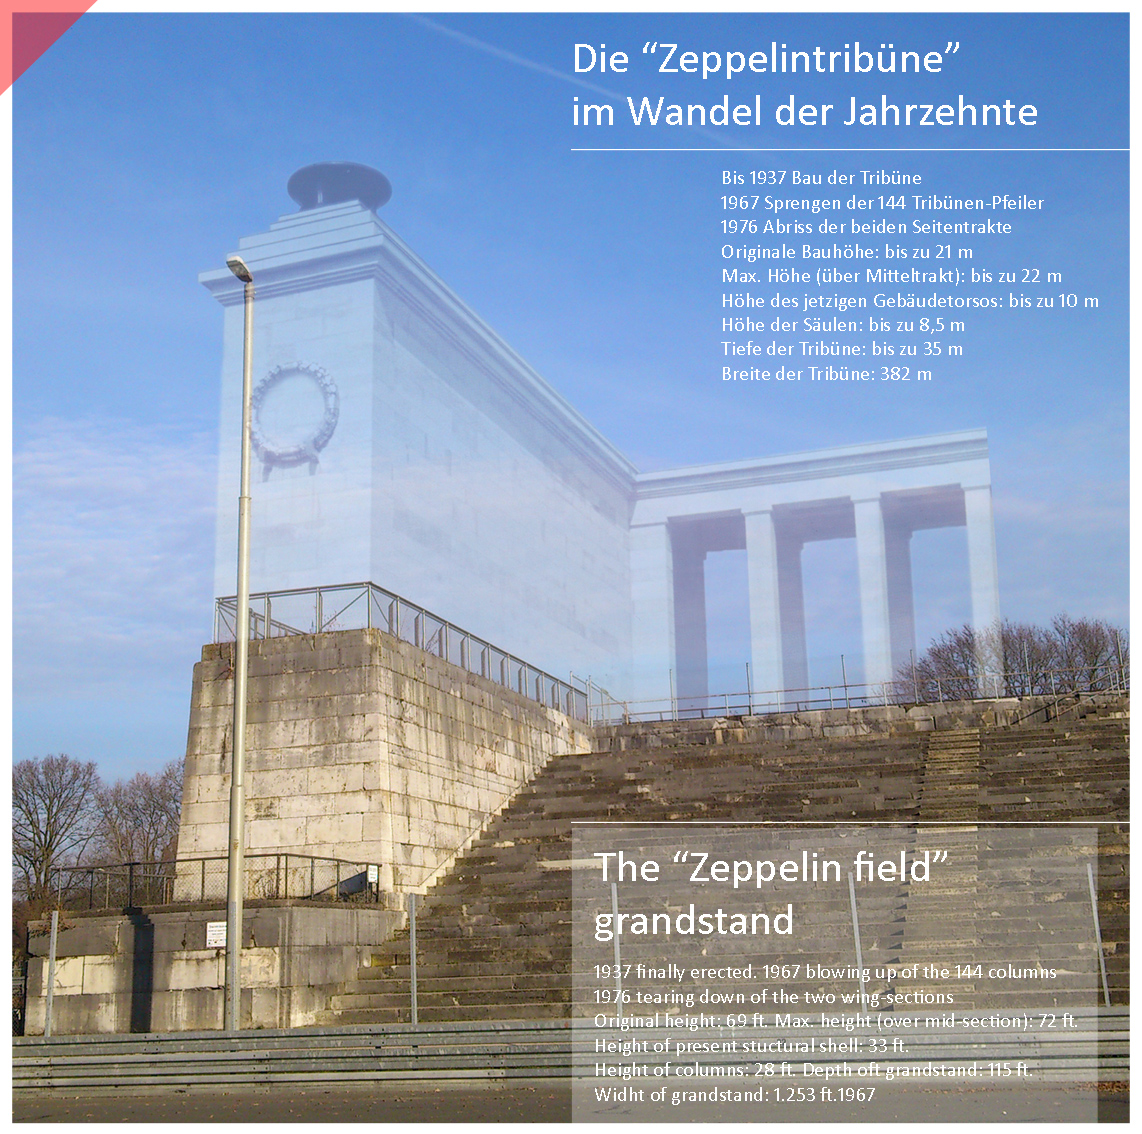 Zeppelin field grandsand postcard view